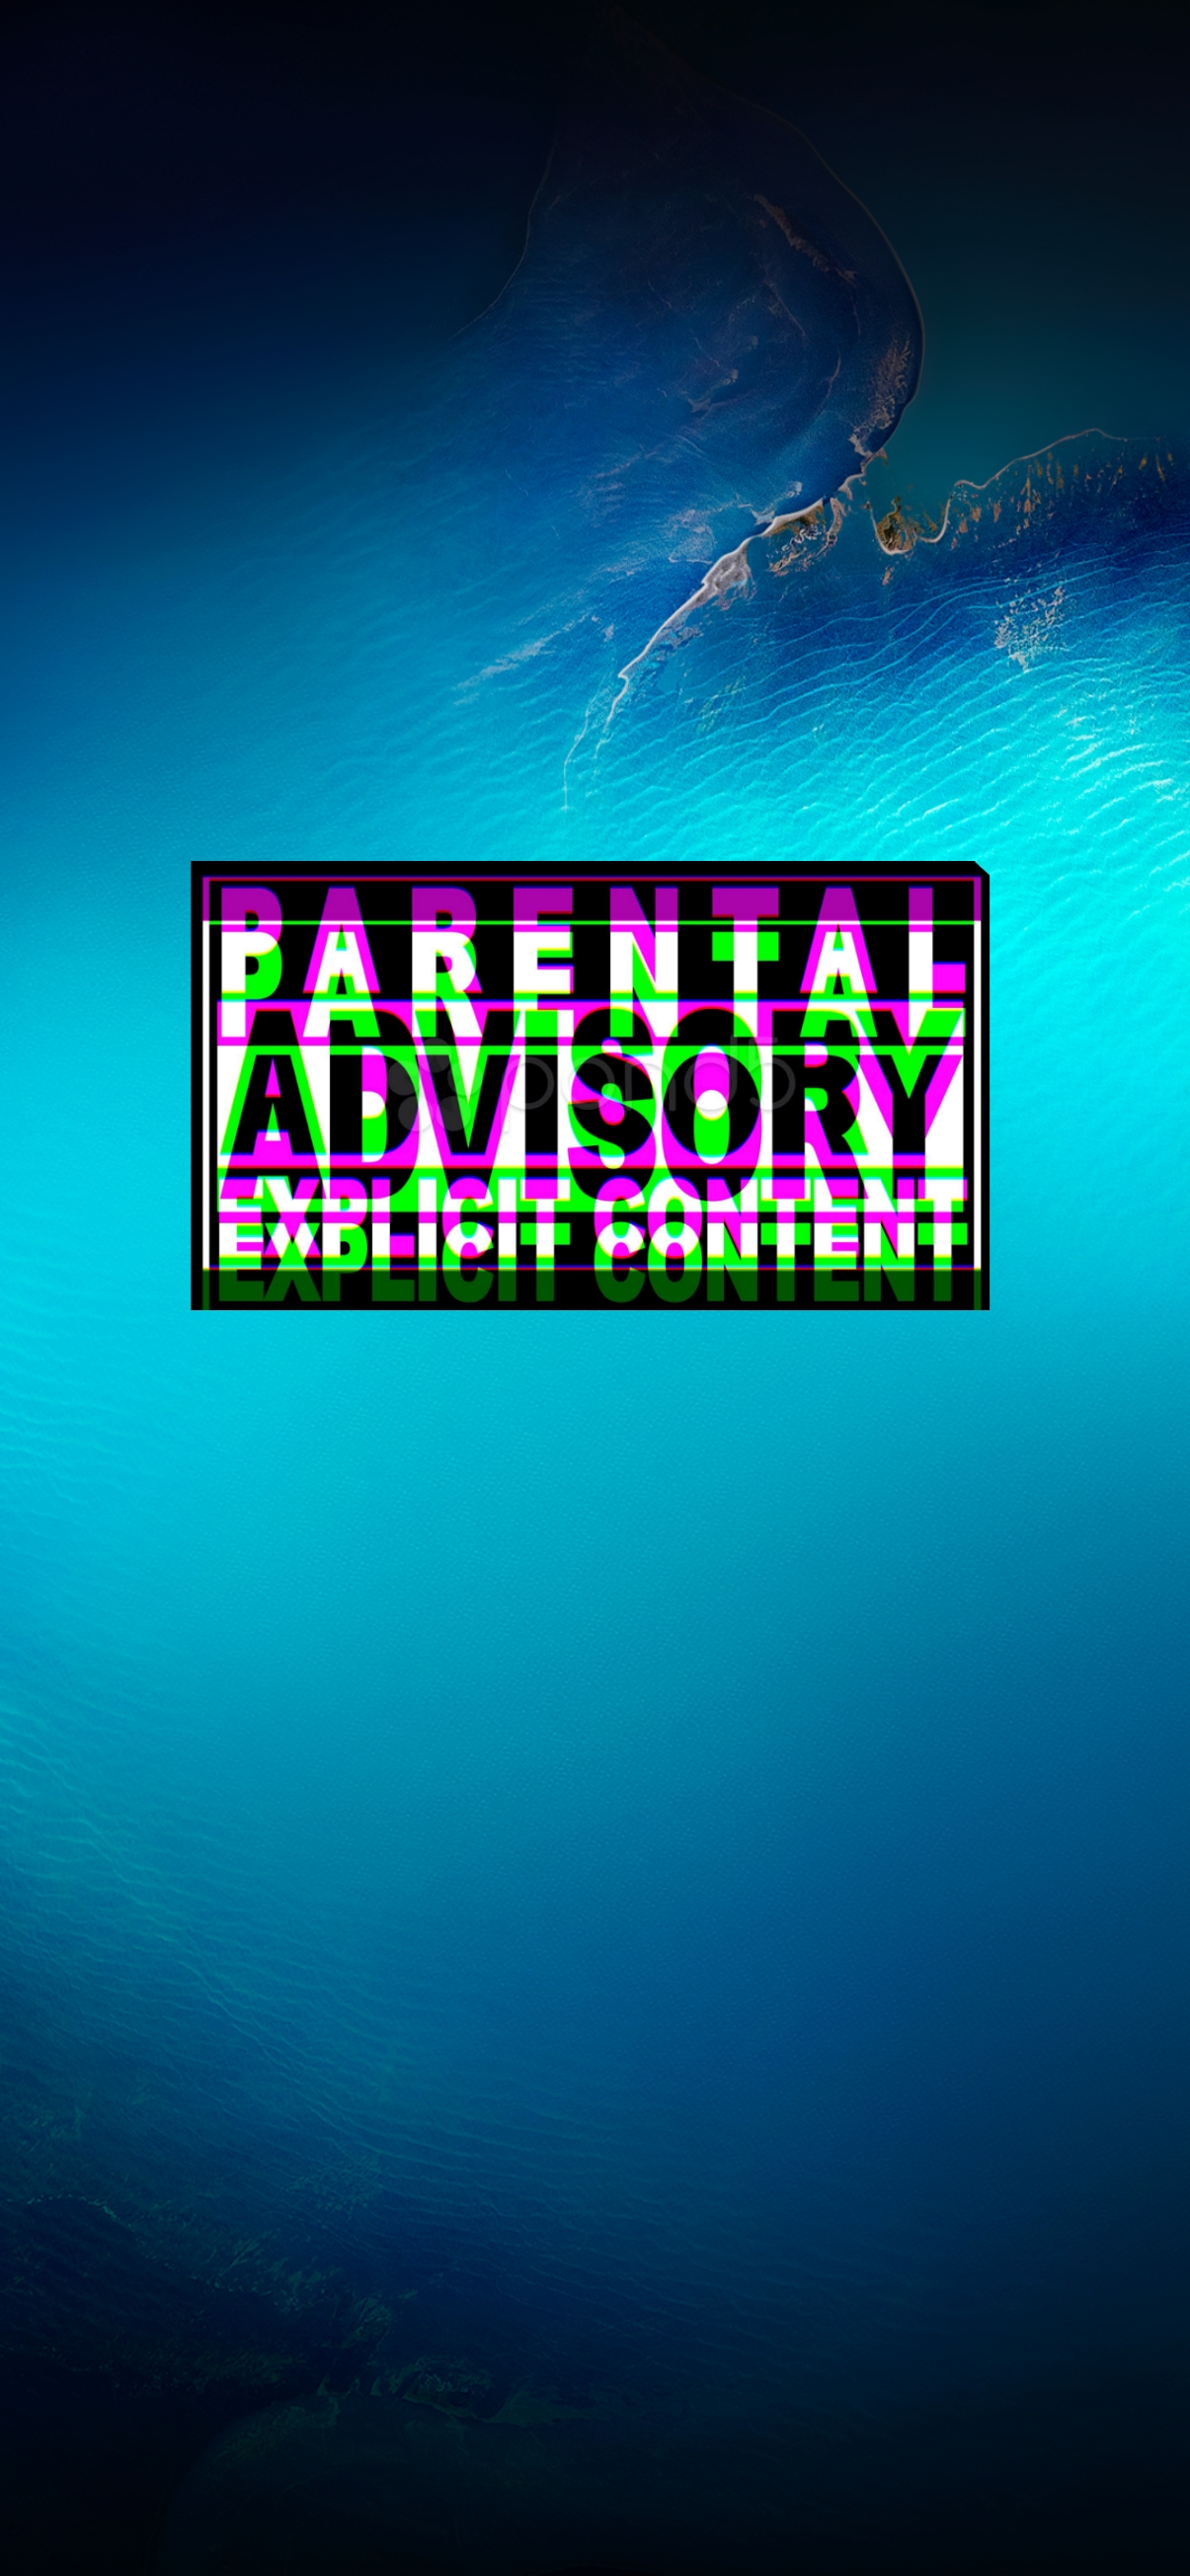 19 iphone wallpapers - Parental Advisory